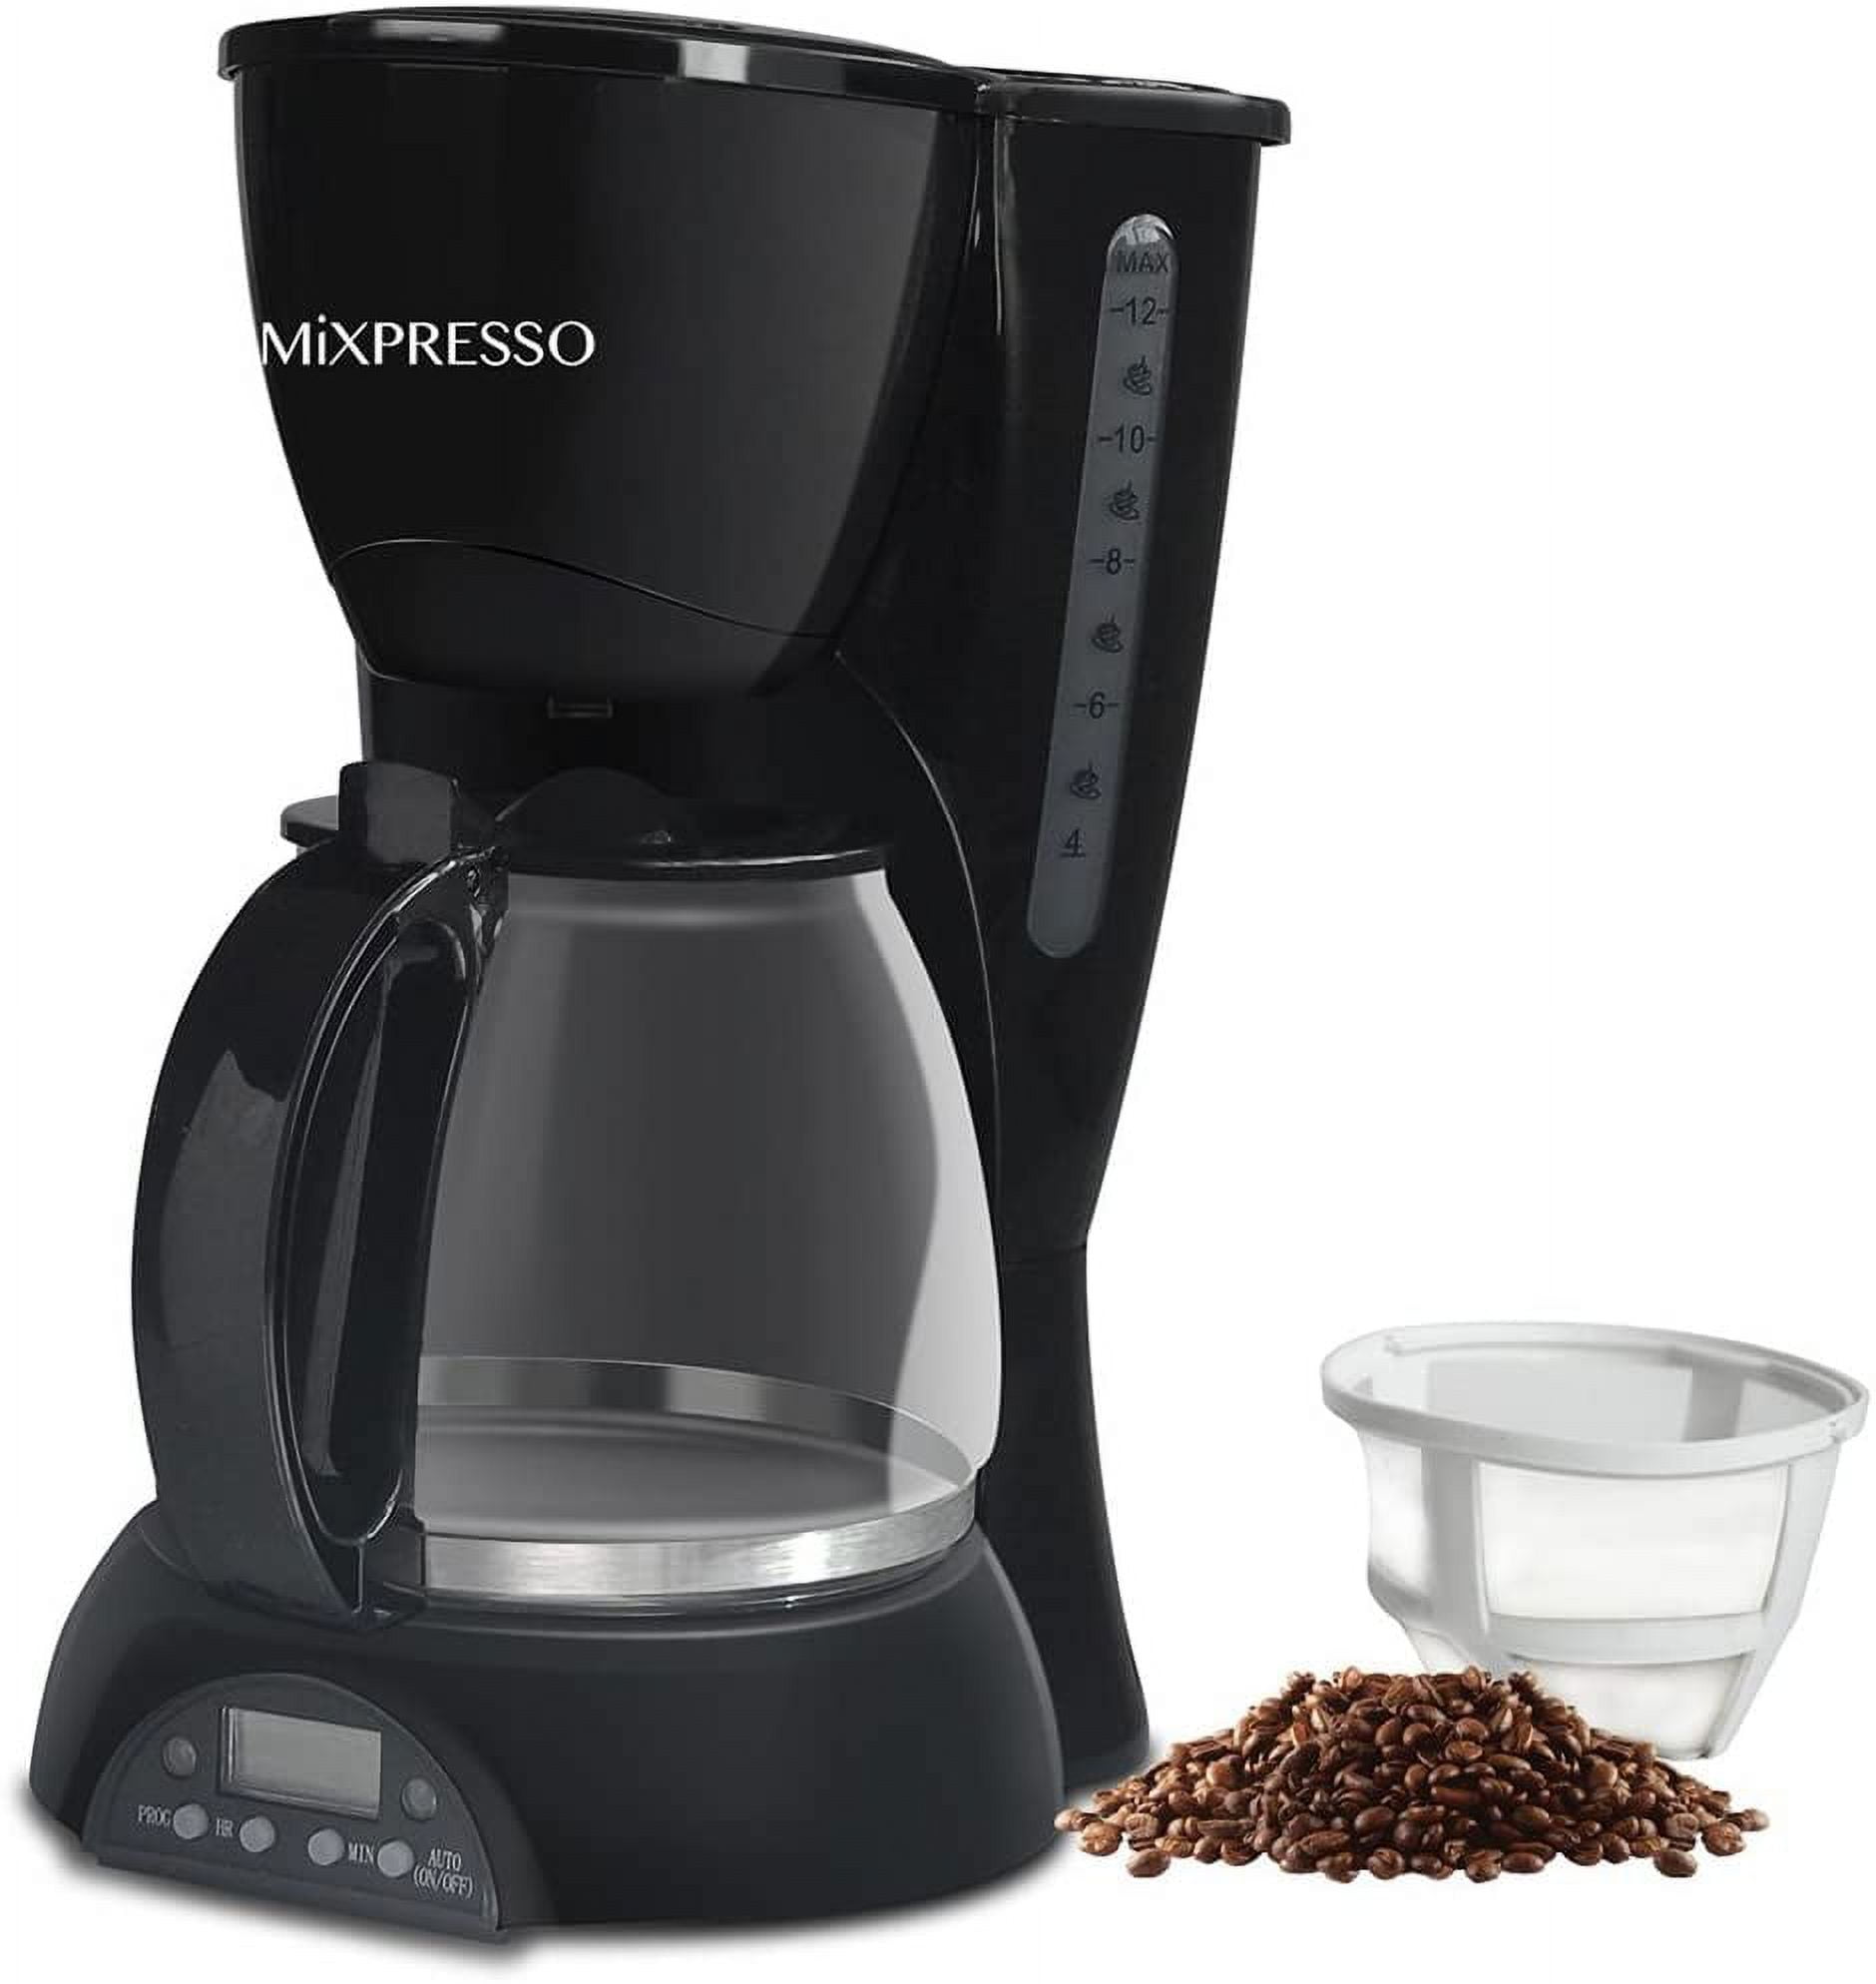  Mixpresso 10-Cup Drip Coffee Maker, Coffee Pot Machine